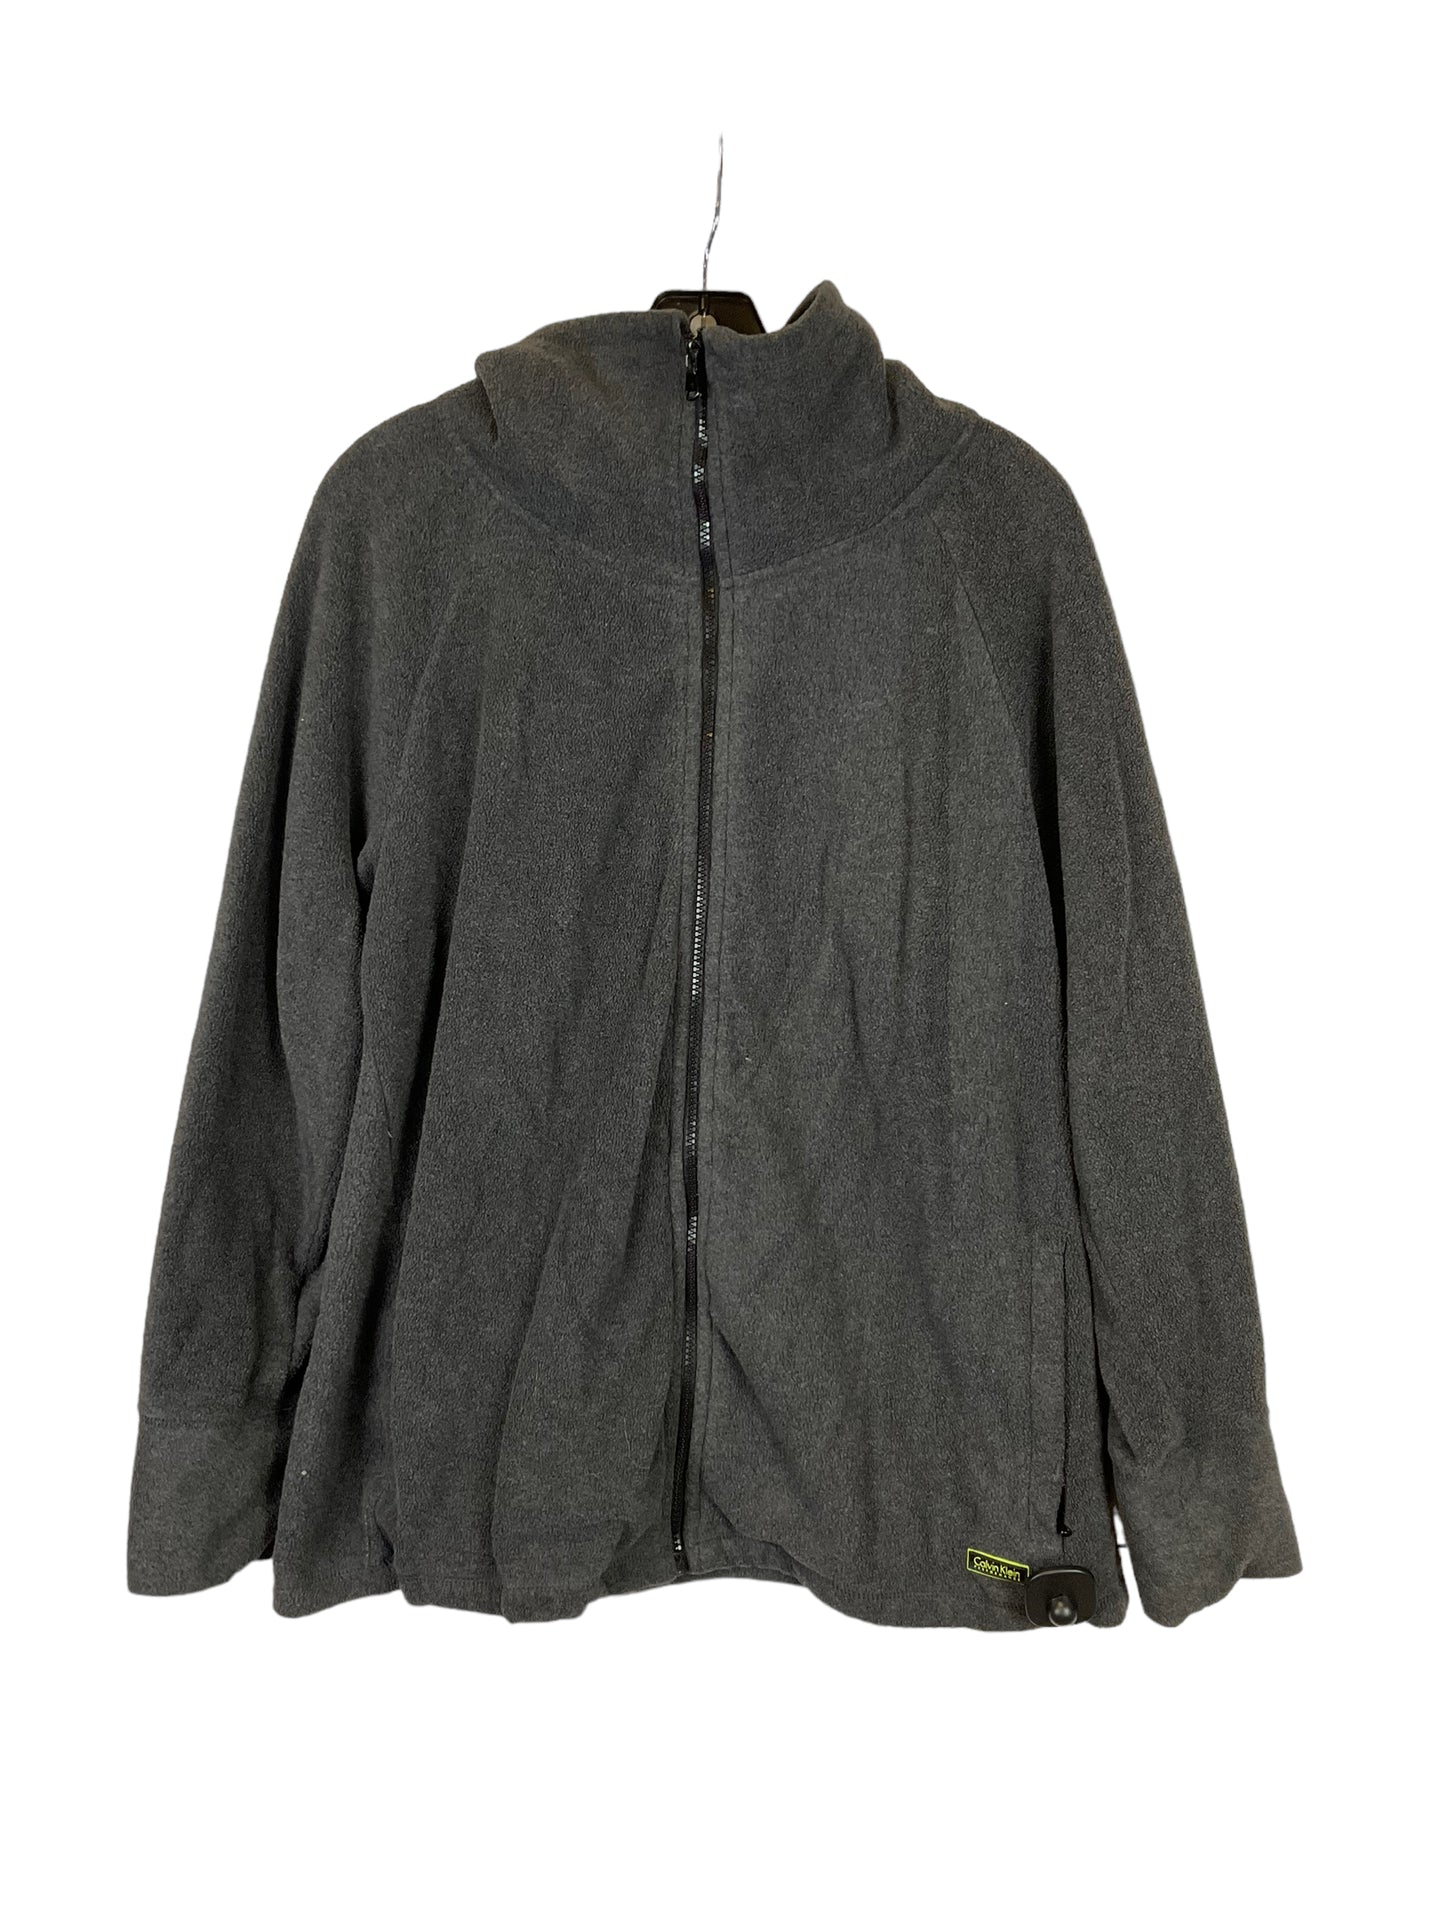 Jacket Fleece By Calvin Klein  Size: 1x